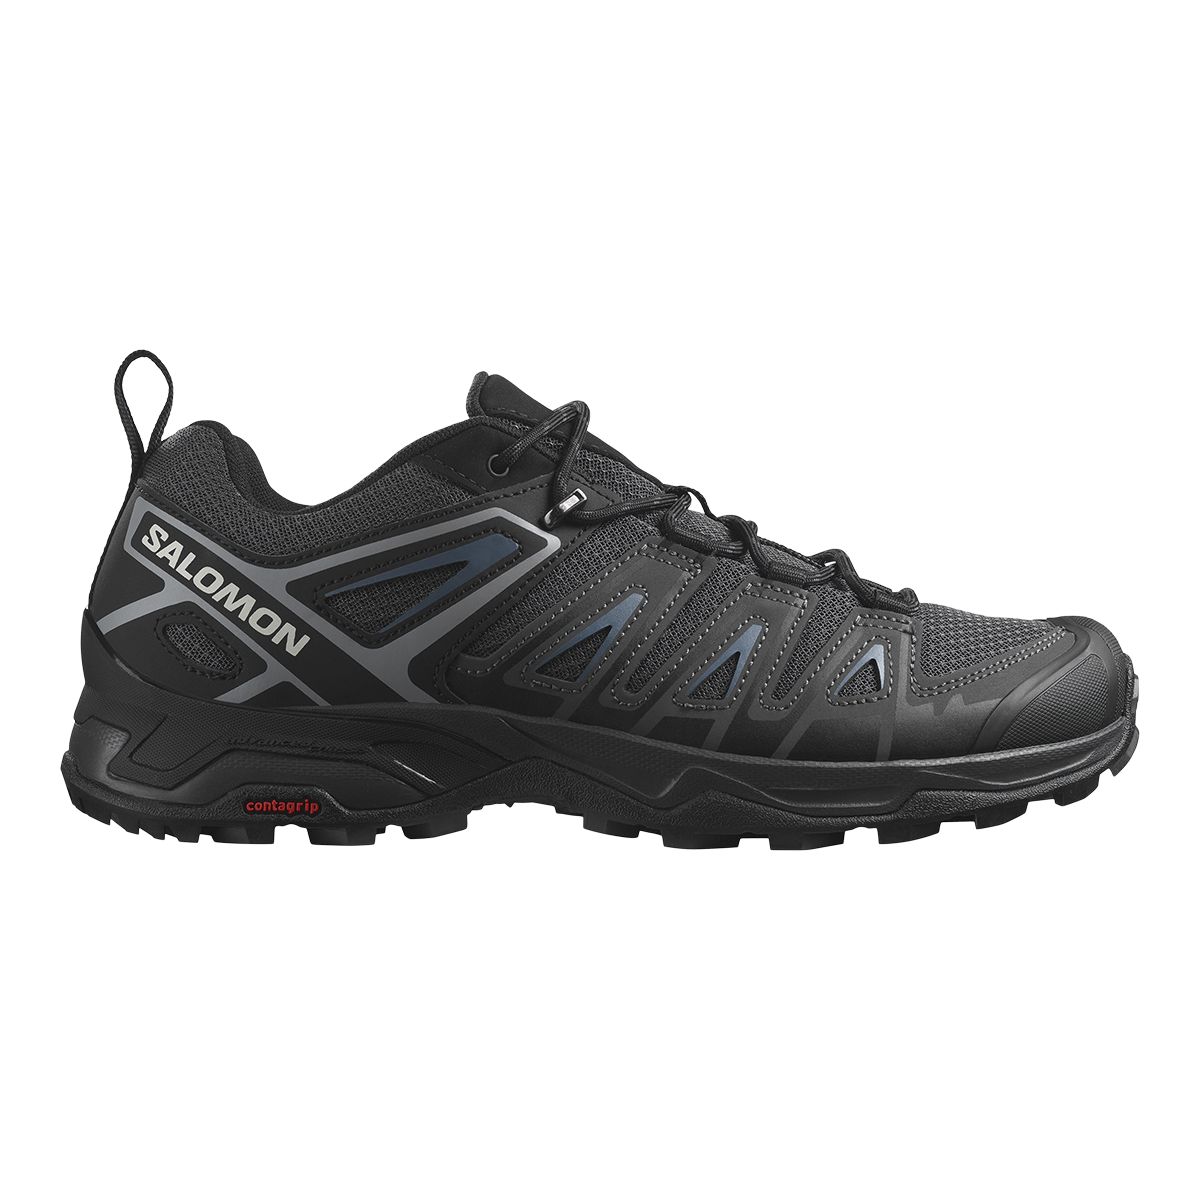 Salomon Men's X Ultra Pioneer Aero Hiking Shoes